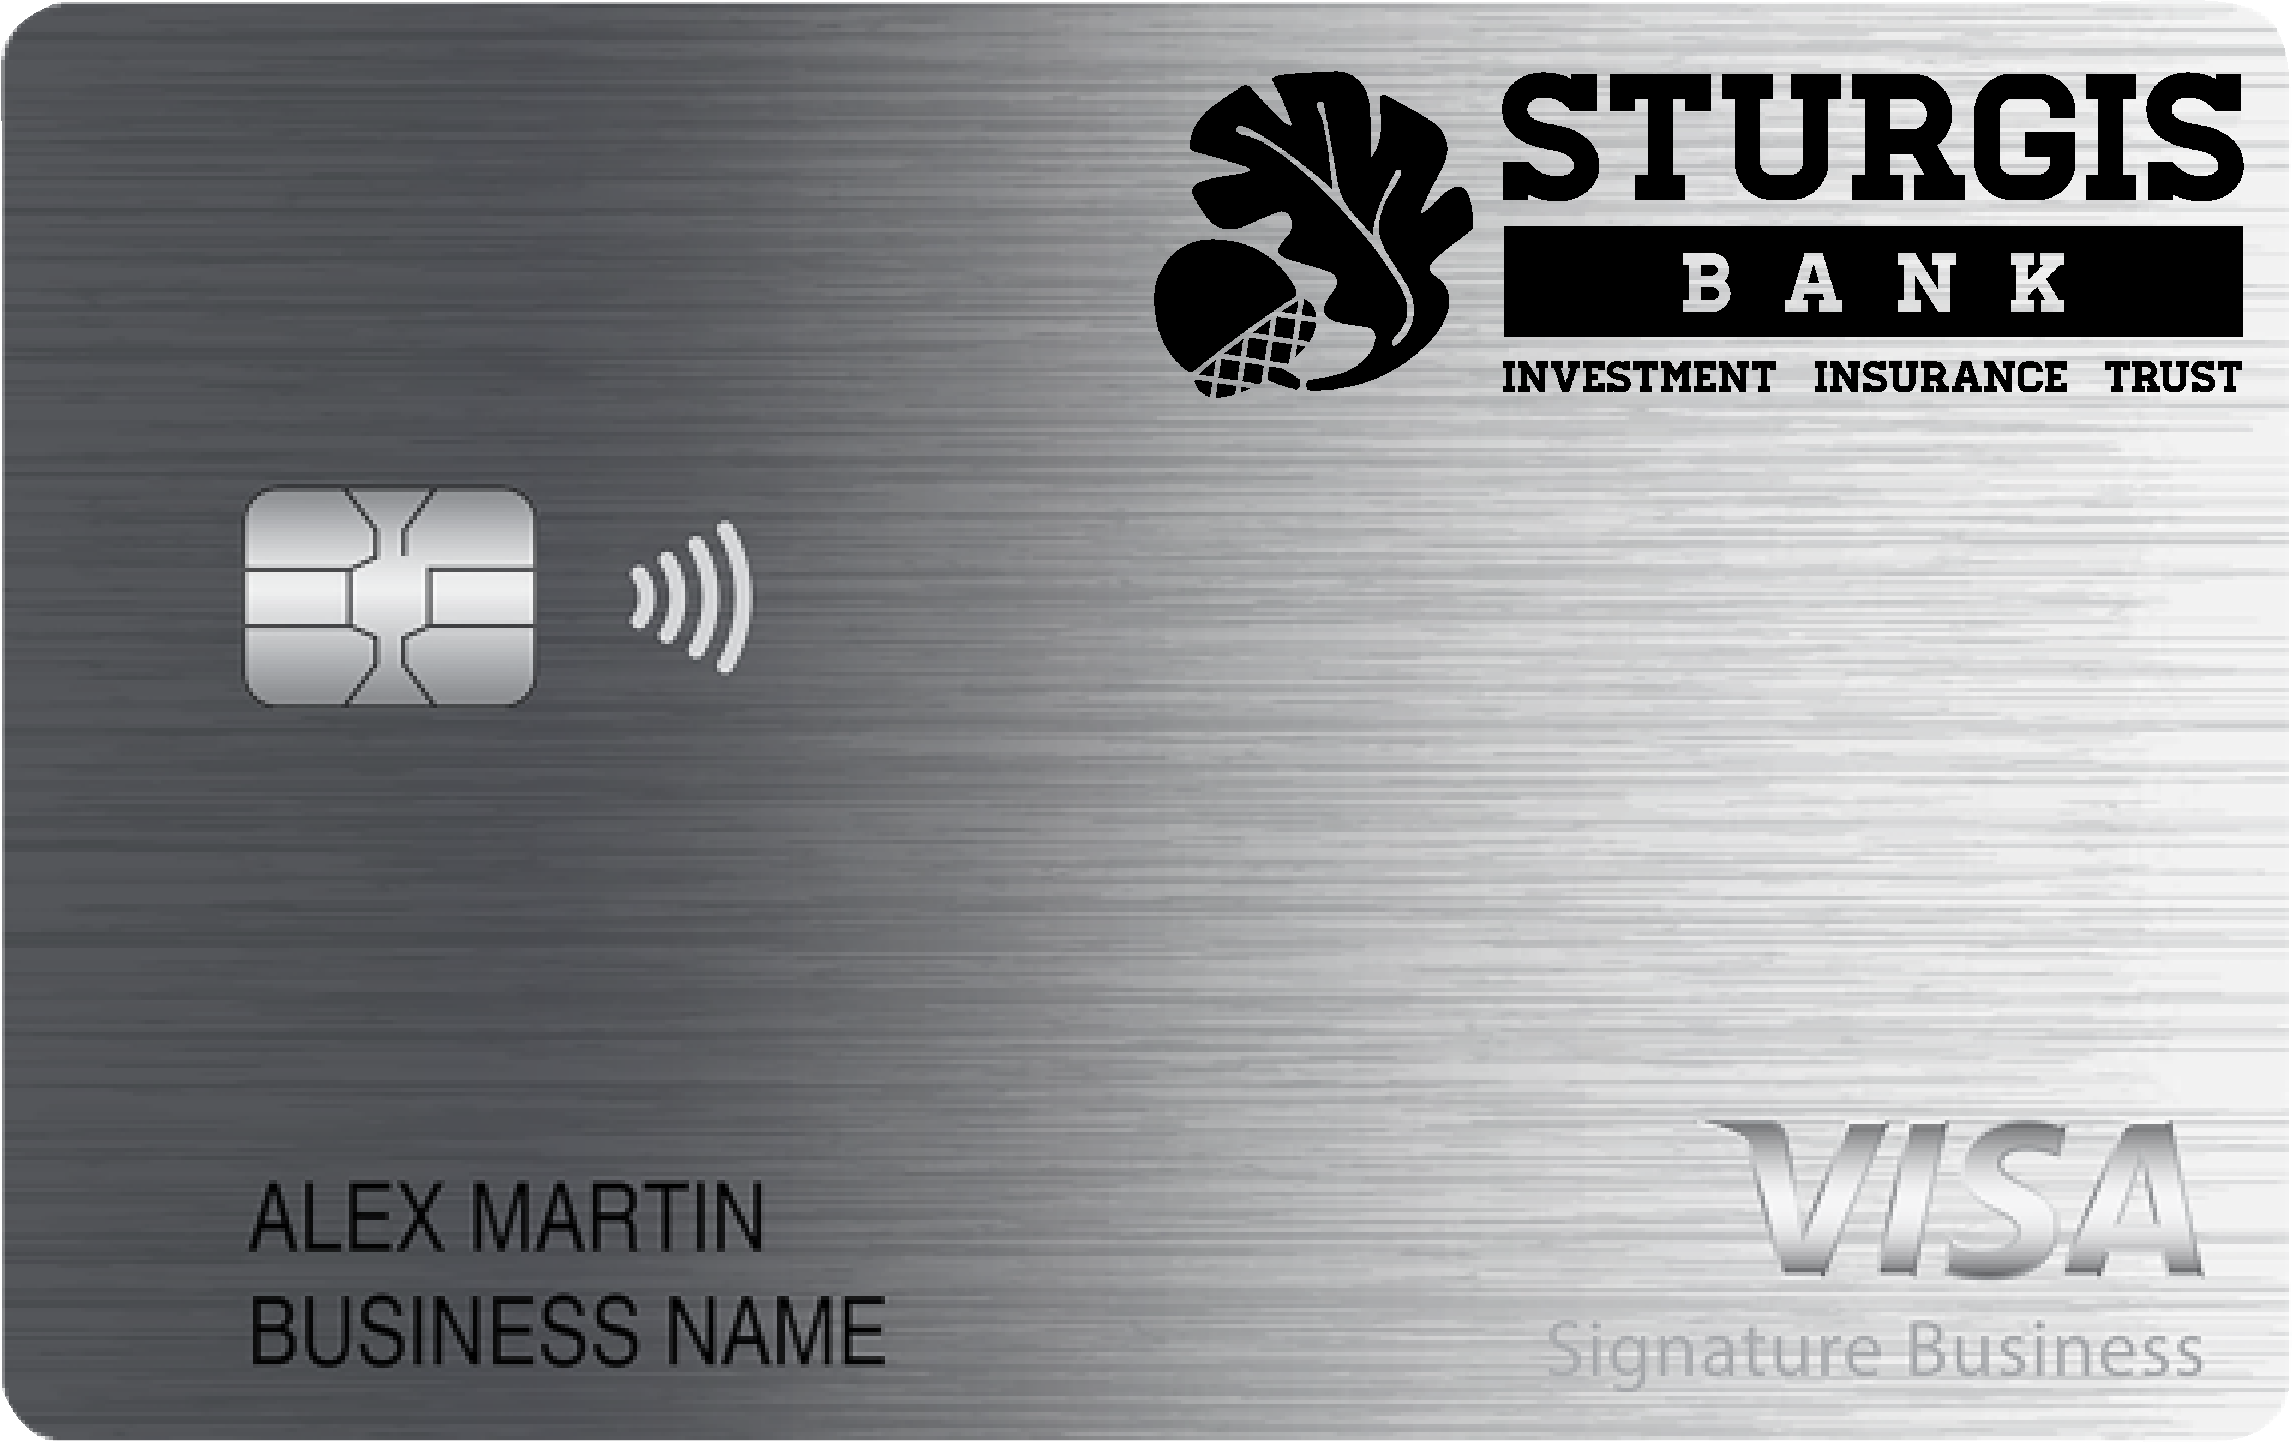 Sturgis Bank Smart Business Rewards Card